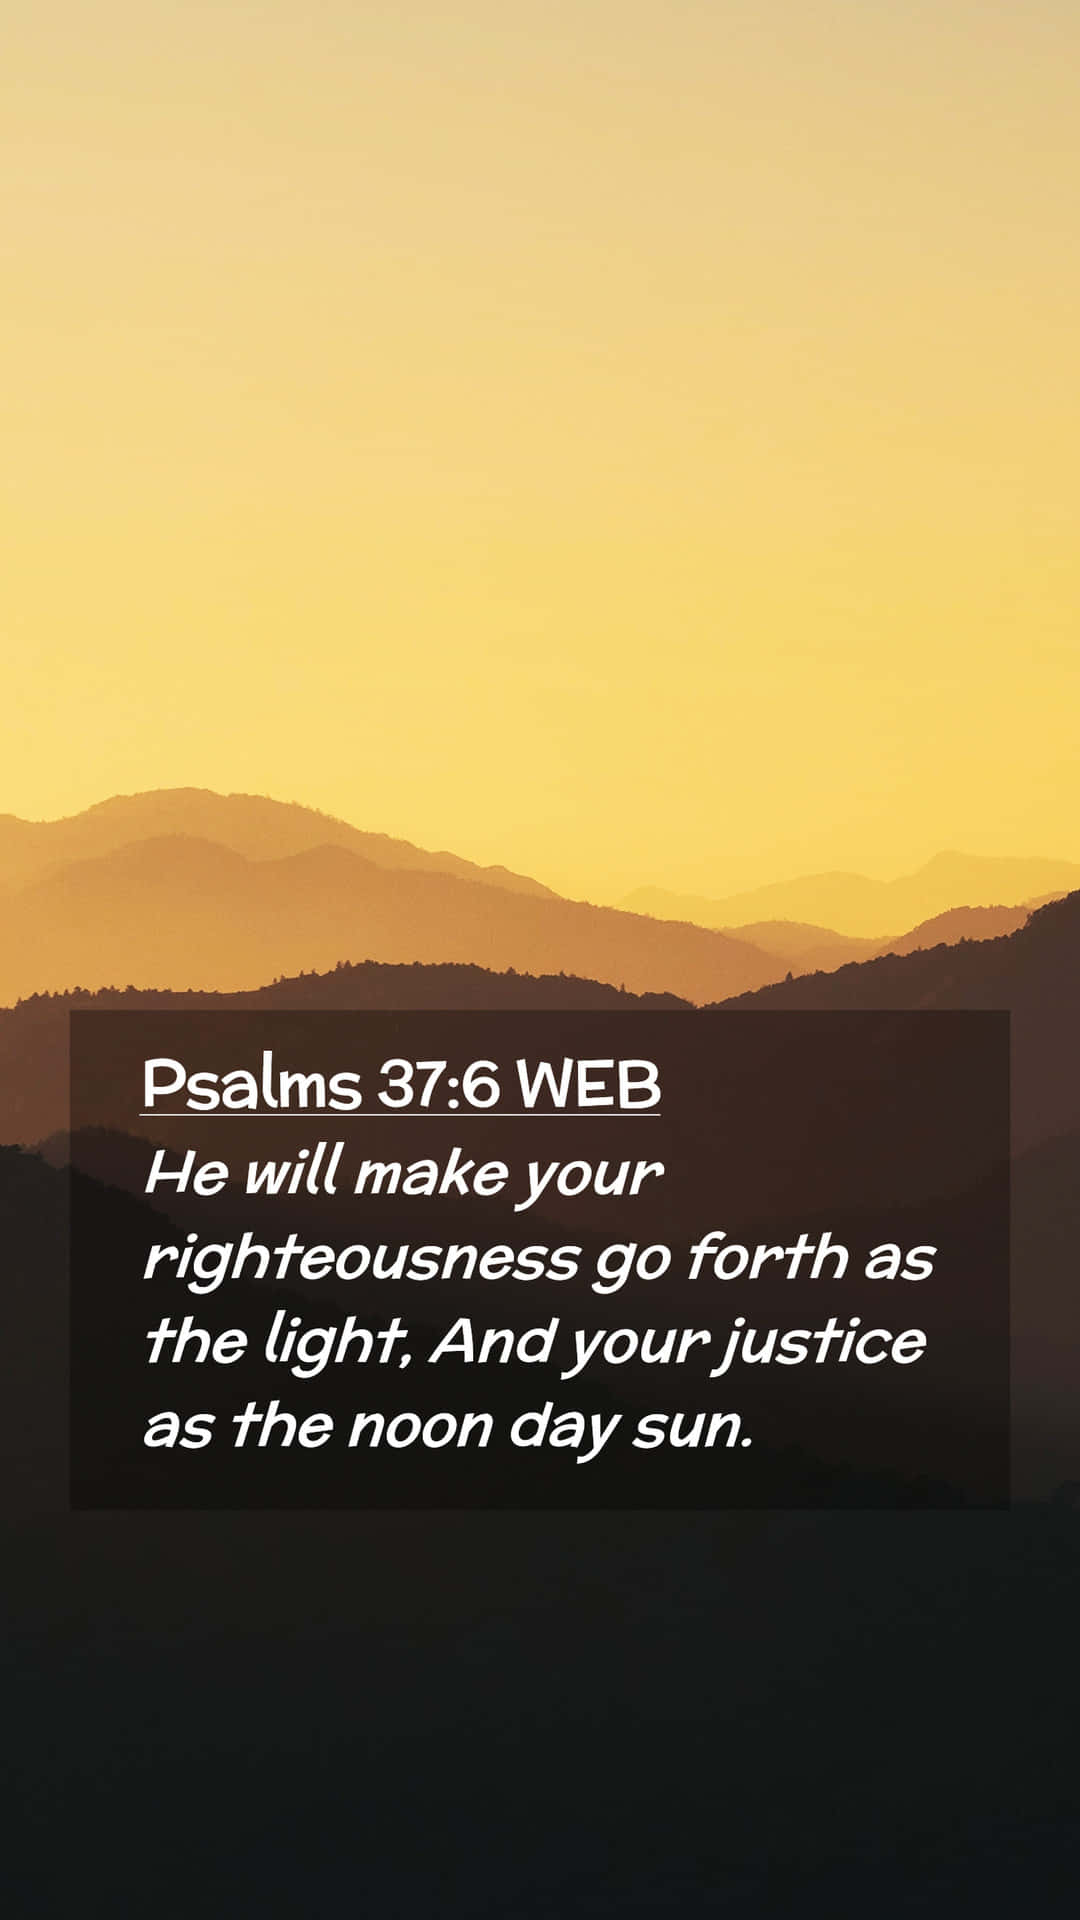 Sunset Mountain Bible Verse Wallpaper